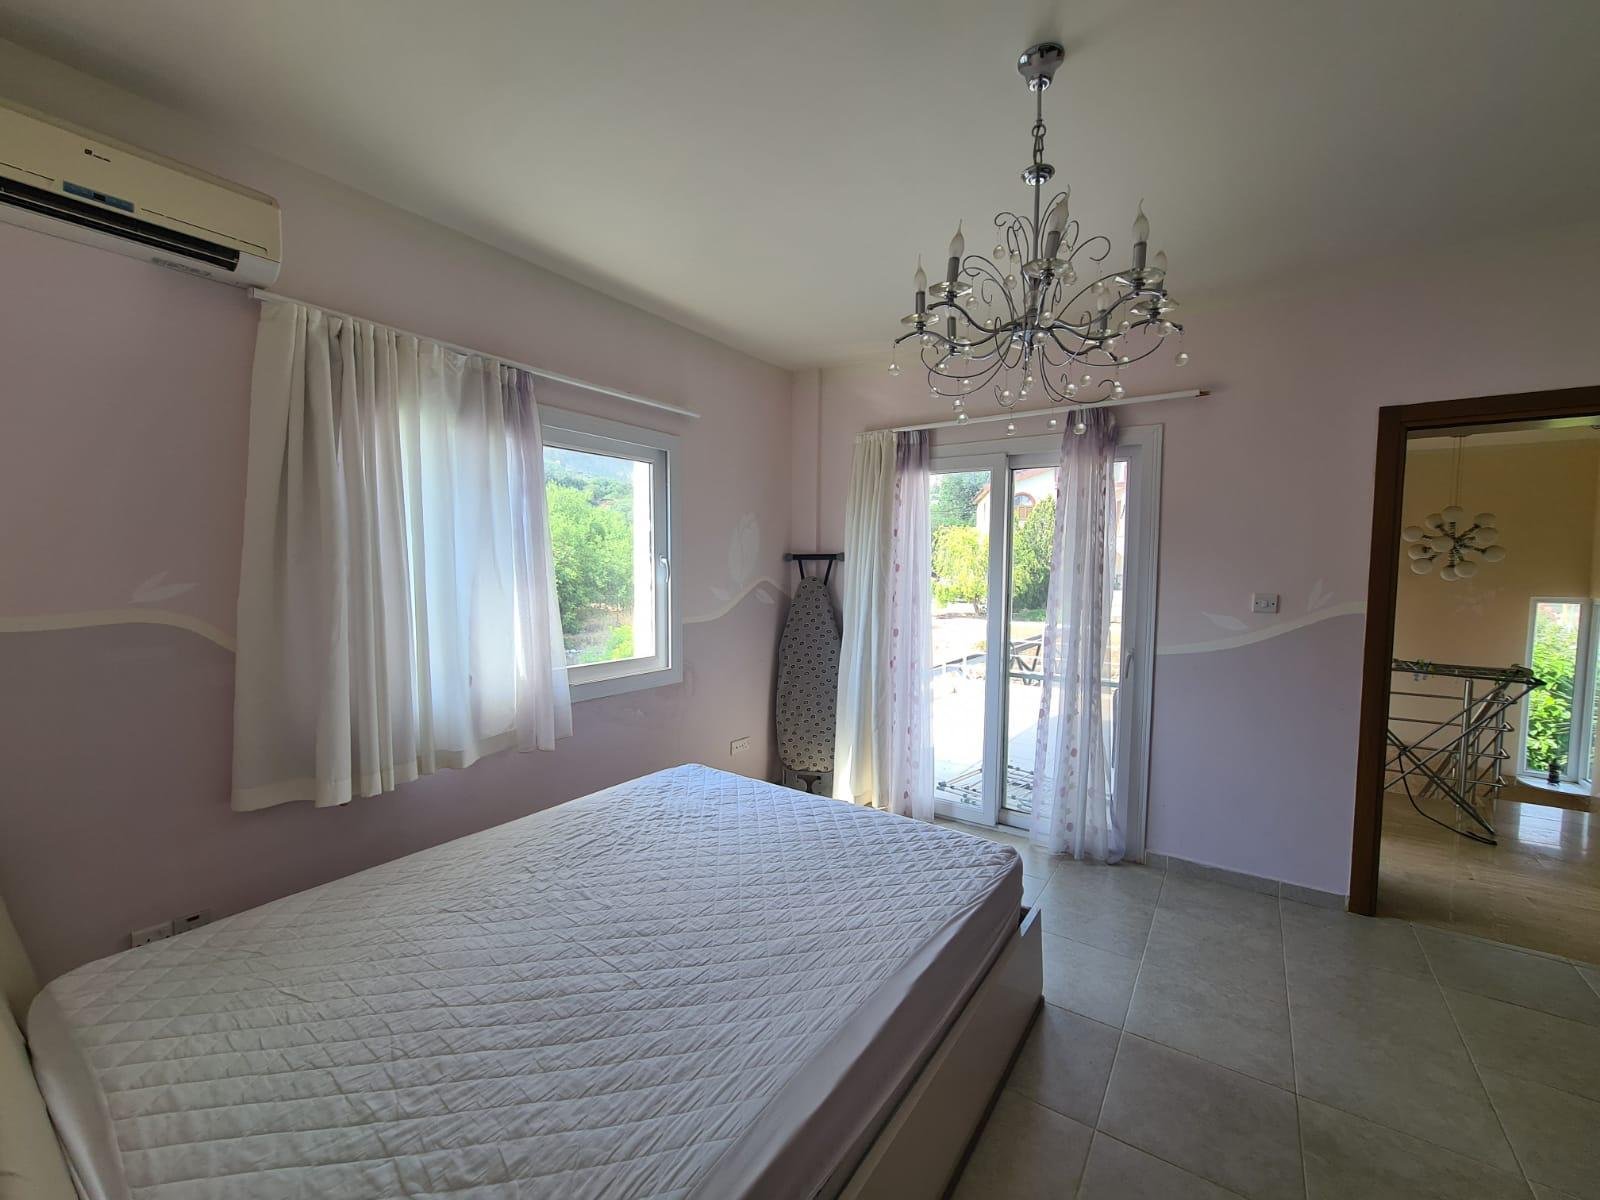 3 bedroom villa for sale in Kyrenia, Karshiyaka-371e4169-5d35-4da3-84b8-f12247b3d177